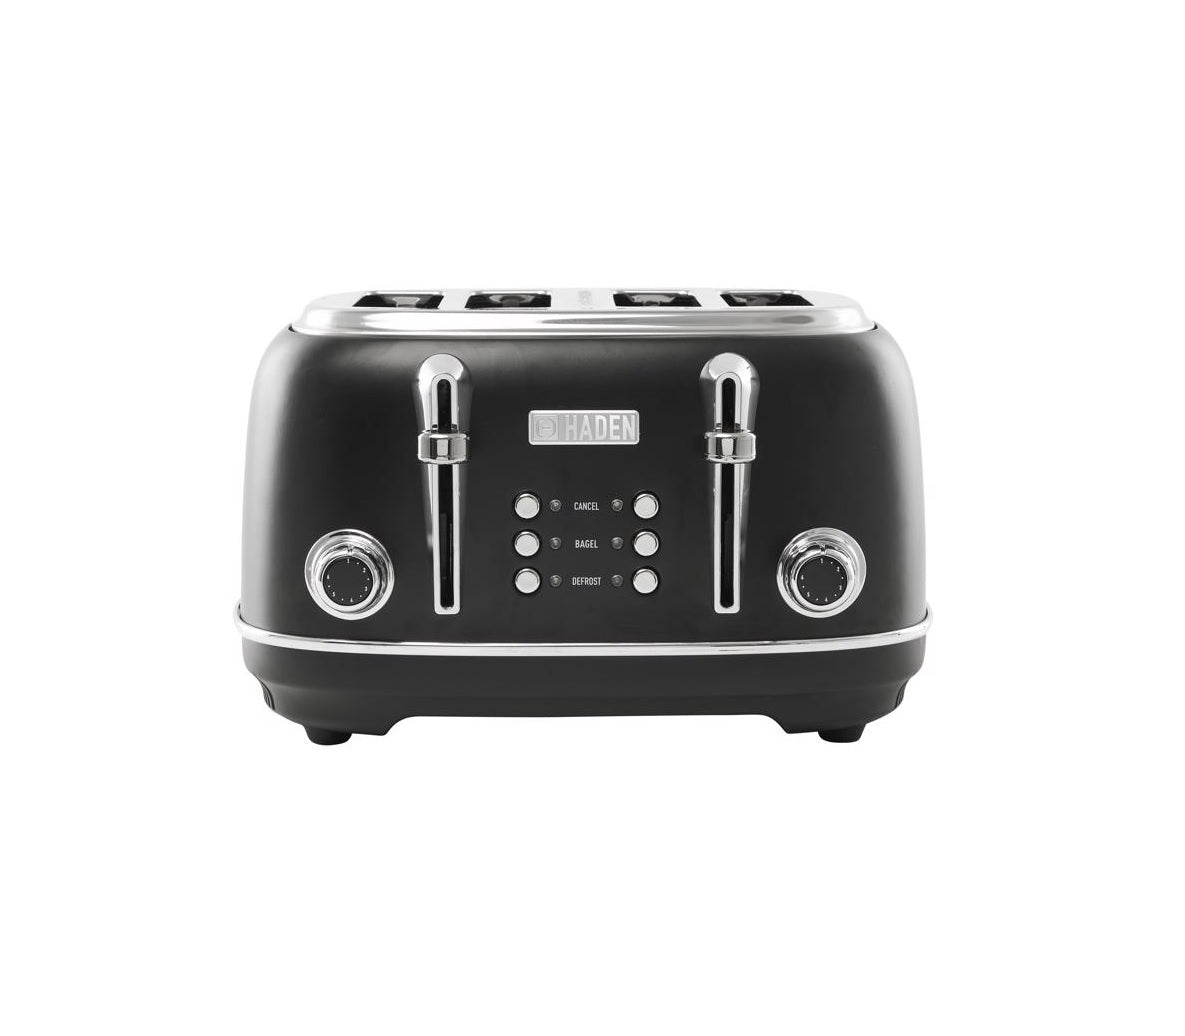 Haden 75096 Heritage 4 Slot Toaster, Stainless Steel, Black